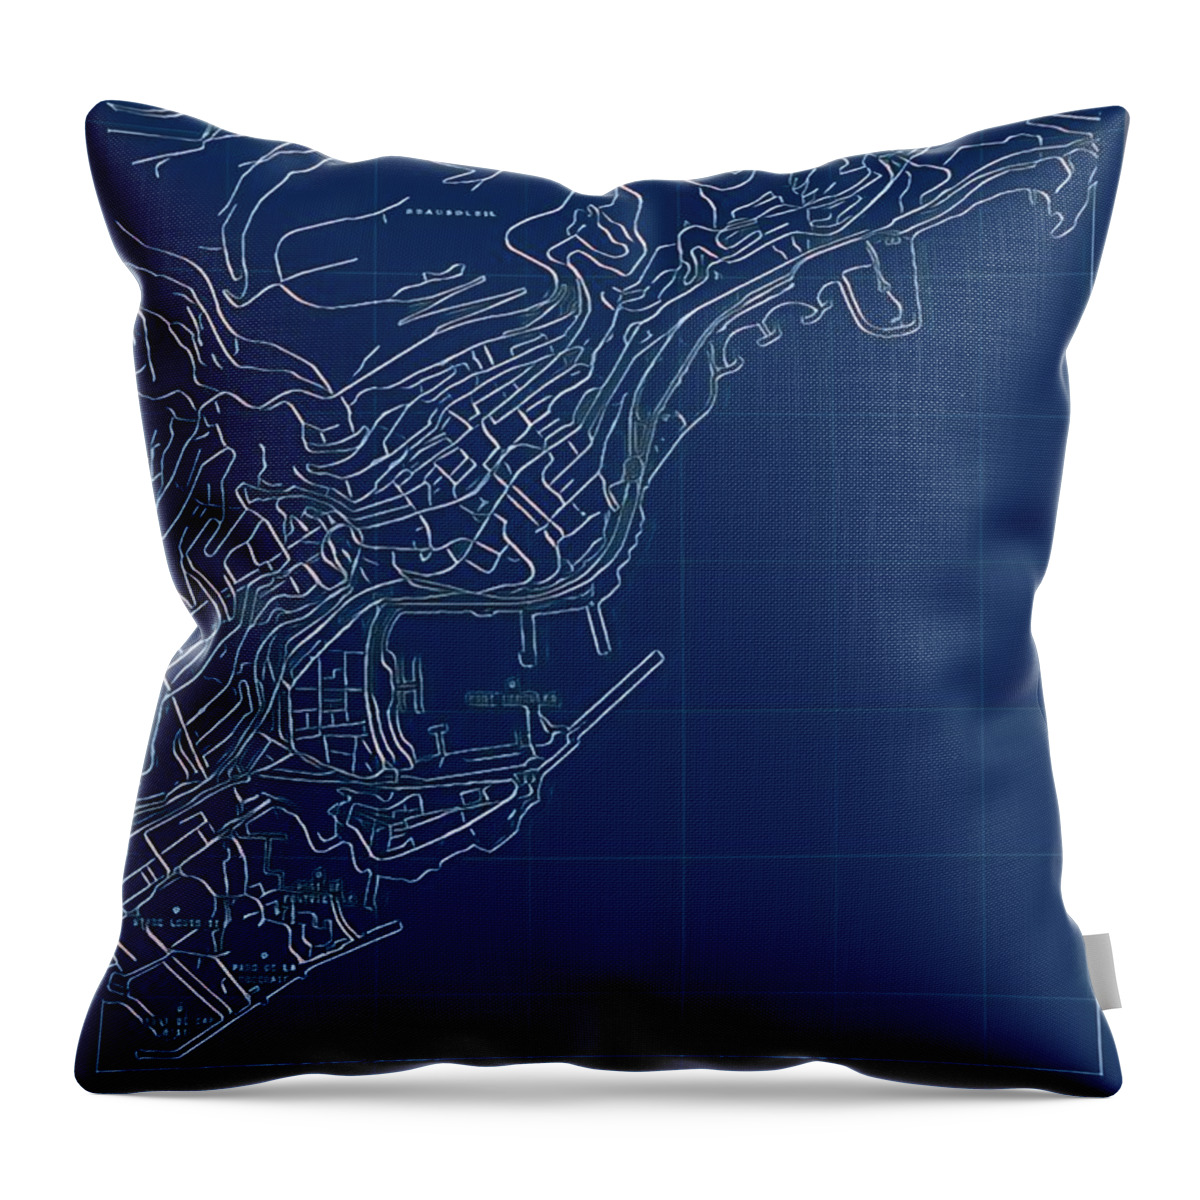 Monaco Throw Pillow featuring the digital art Monaco Blueprint City Map by HELGE Art Gallery